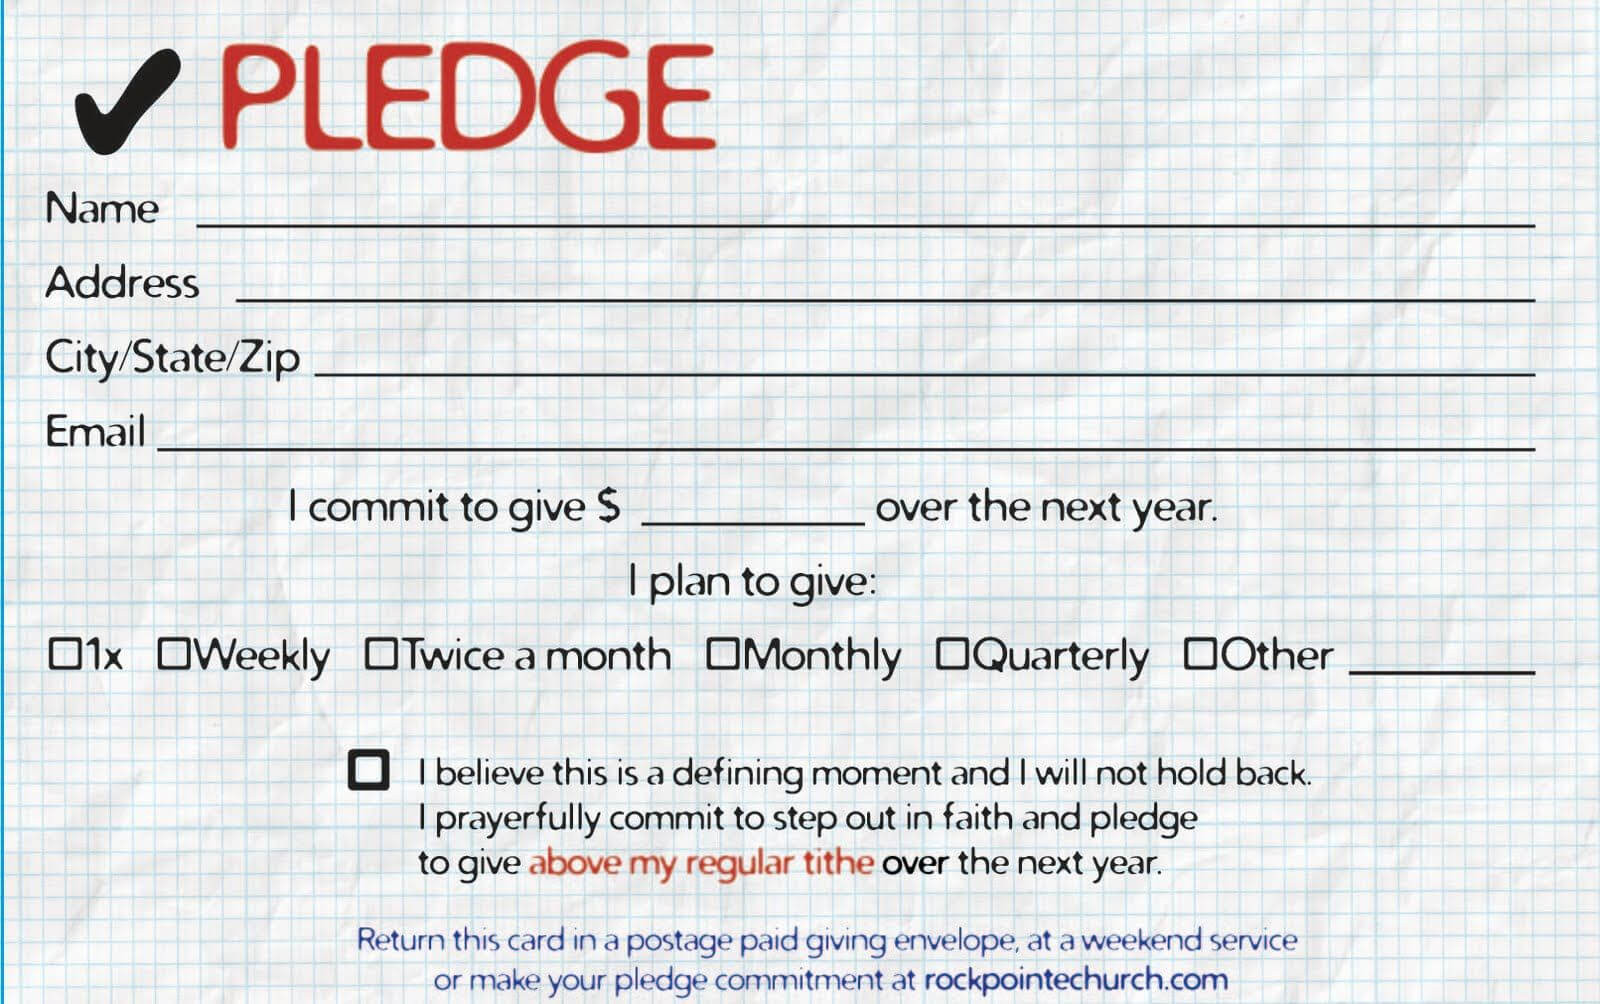 Pledge Cards For Churches | Pledge Card Templates | Card Inside Pledge Card Template For Church